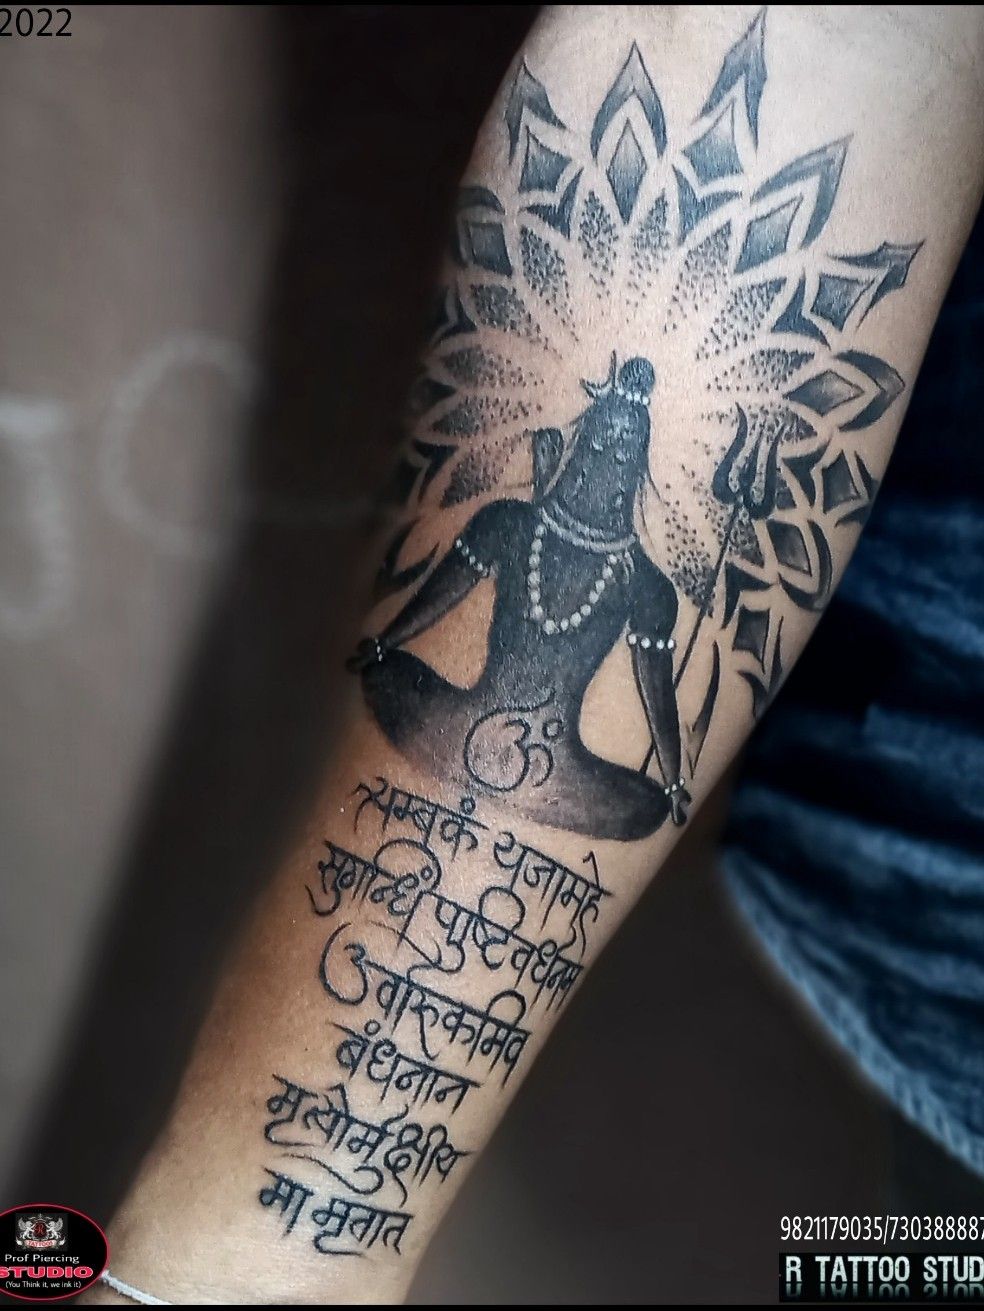 Tattoo uploaded by Rtattoo studio • #shivatattoo #shiva #lordshivatemple  #shivam #mantra #mantratattoo #shivamantratattoo #shivamandalatattoo  #lordshivatattoo#sankarbhagvantattoo #mahadevtatto #mahakaltattoo  #kedarnath #mandalashivatattoo #shivatattoo ...